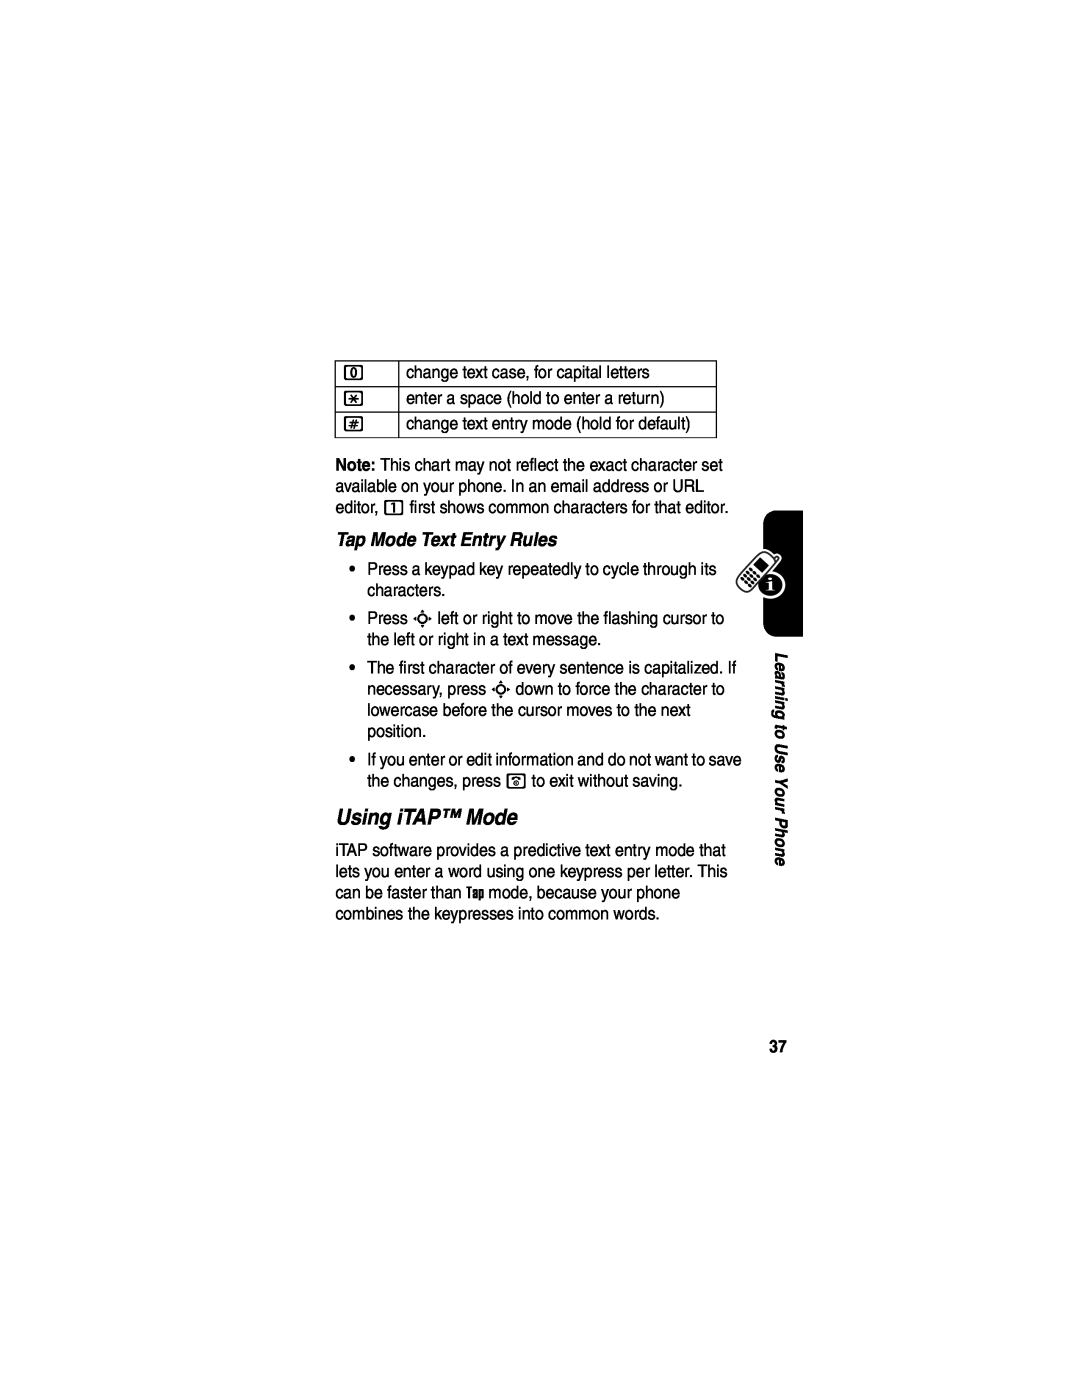 Motorola V551SLVATT manual Using iTAP Mode, Tap Mode Text Entry Rules 